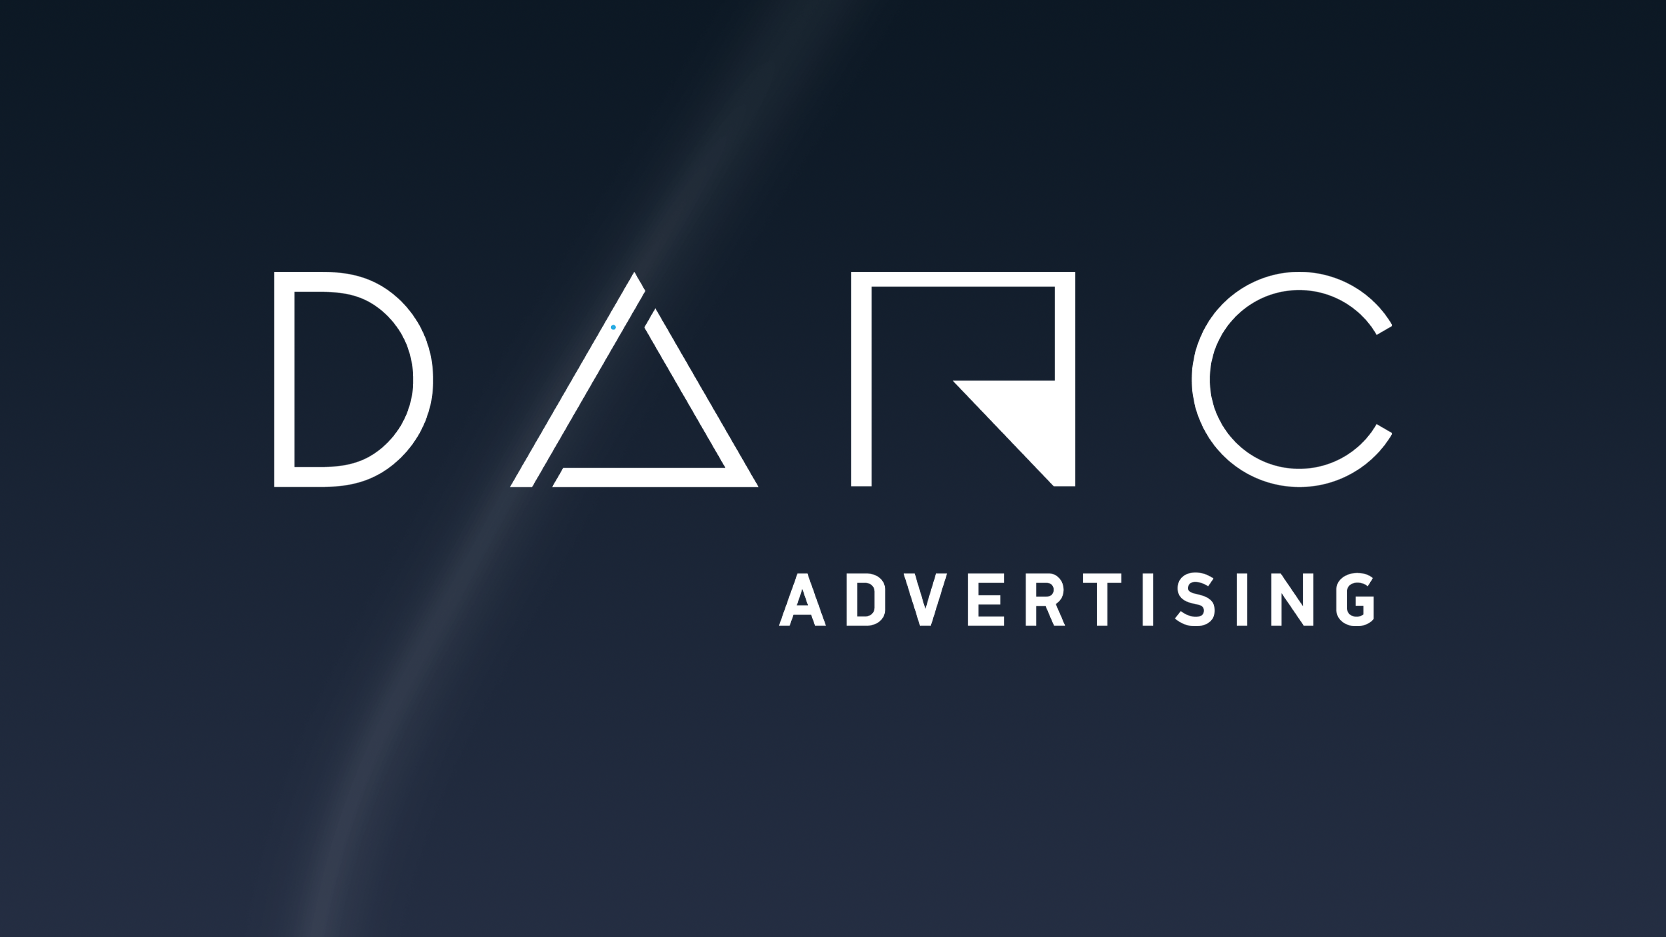 darc advertising